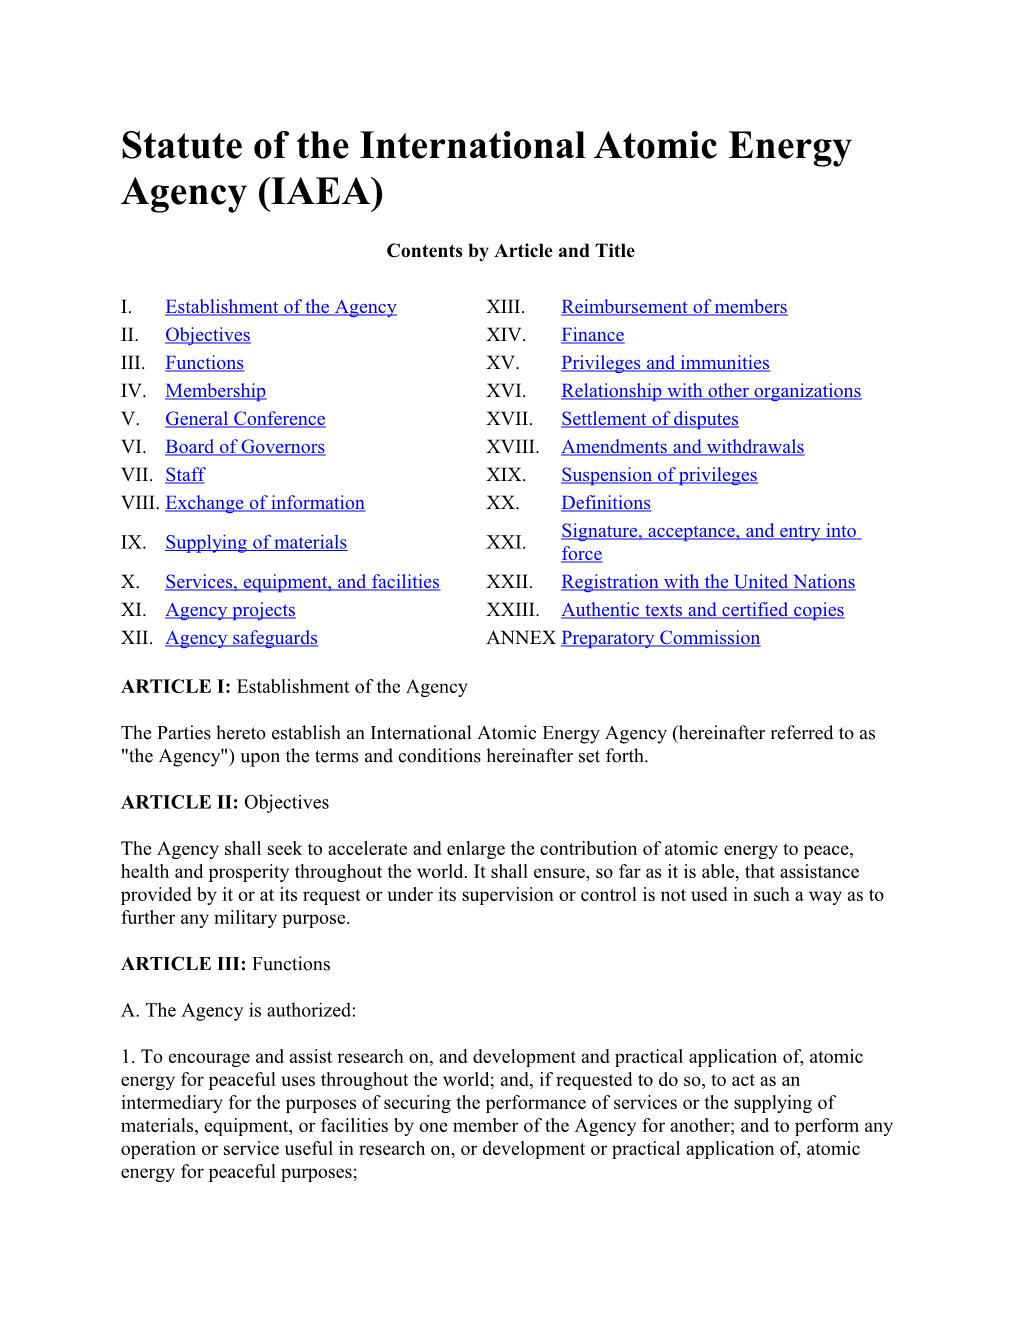 Statute of the International Atomic Energy Agency (IAEA)